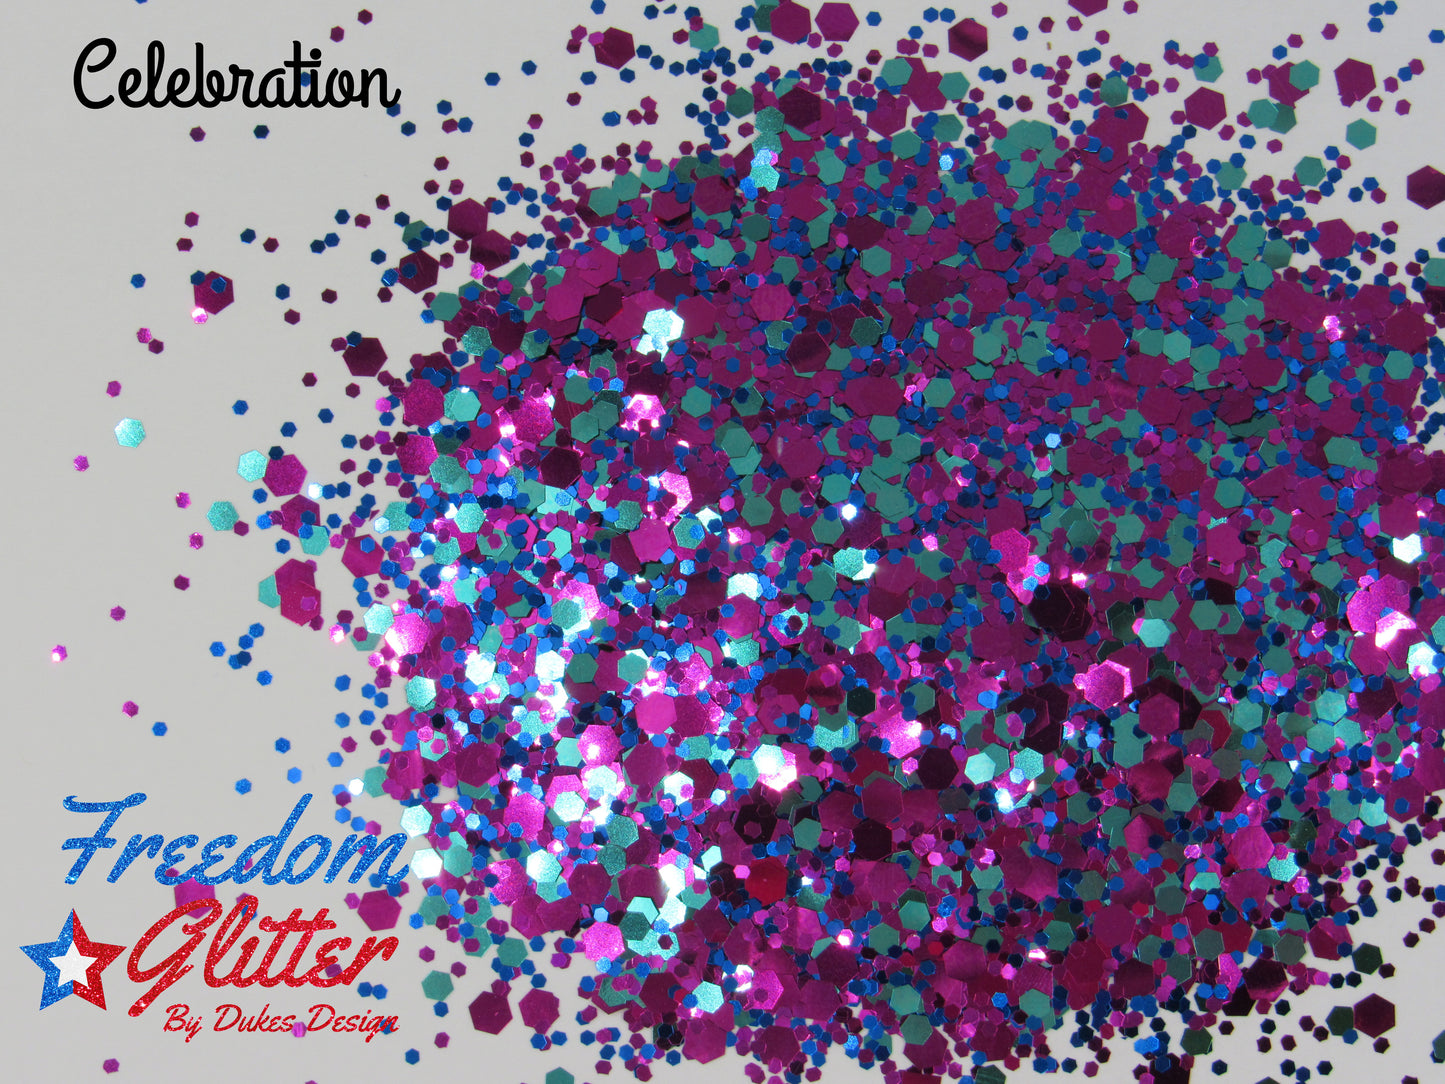 Celebration (Exclusive Mix Glitter)